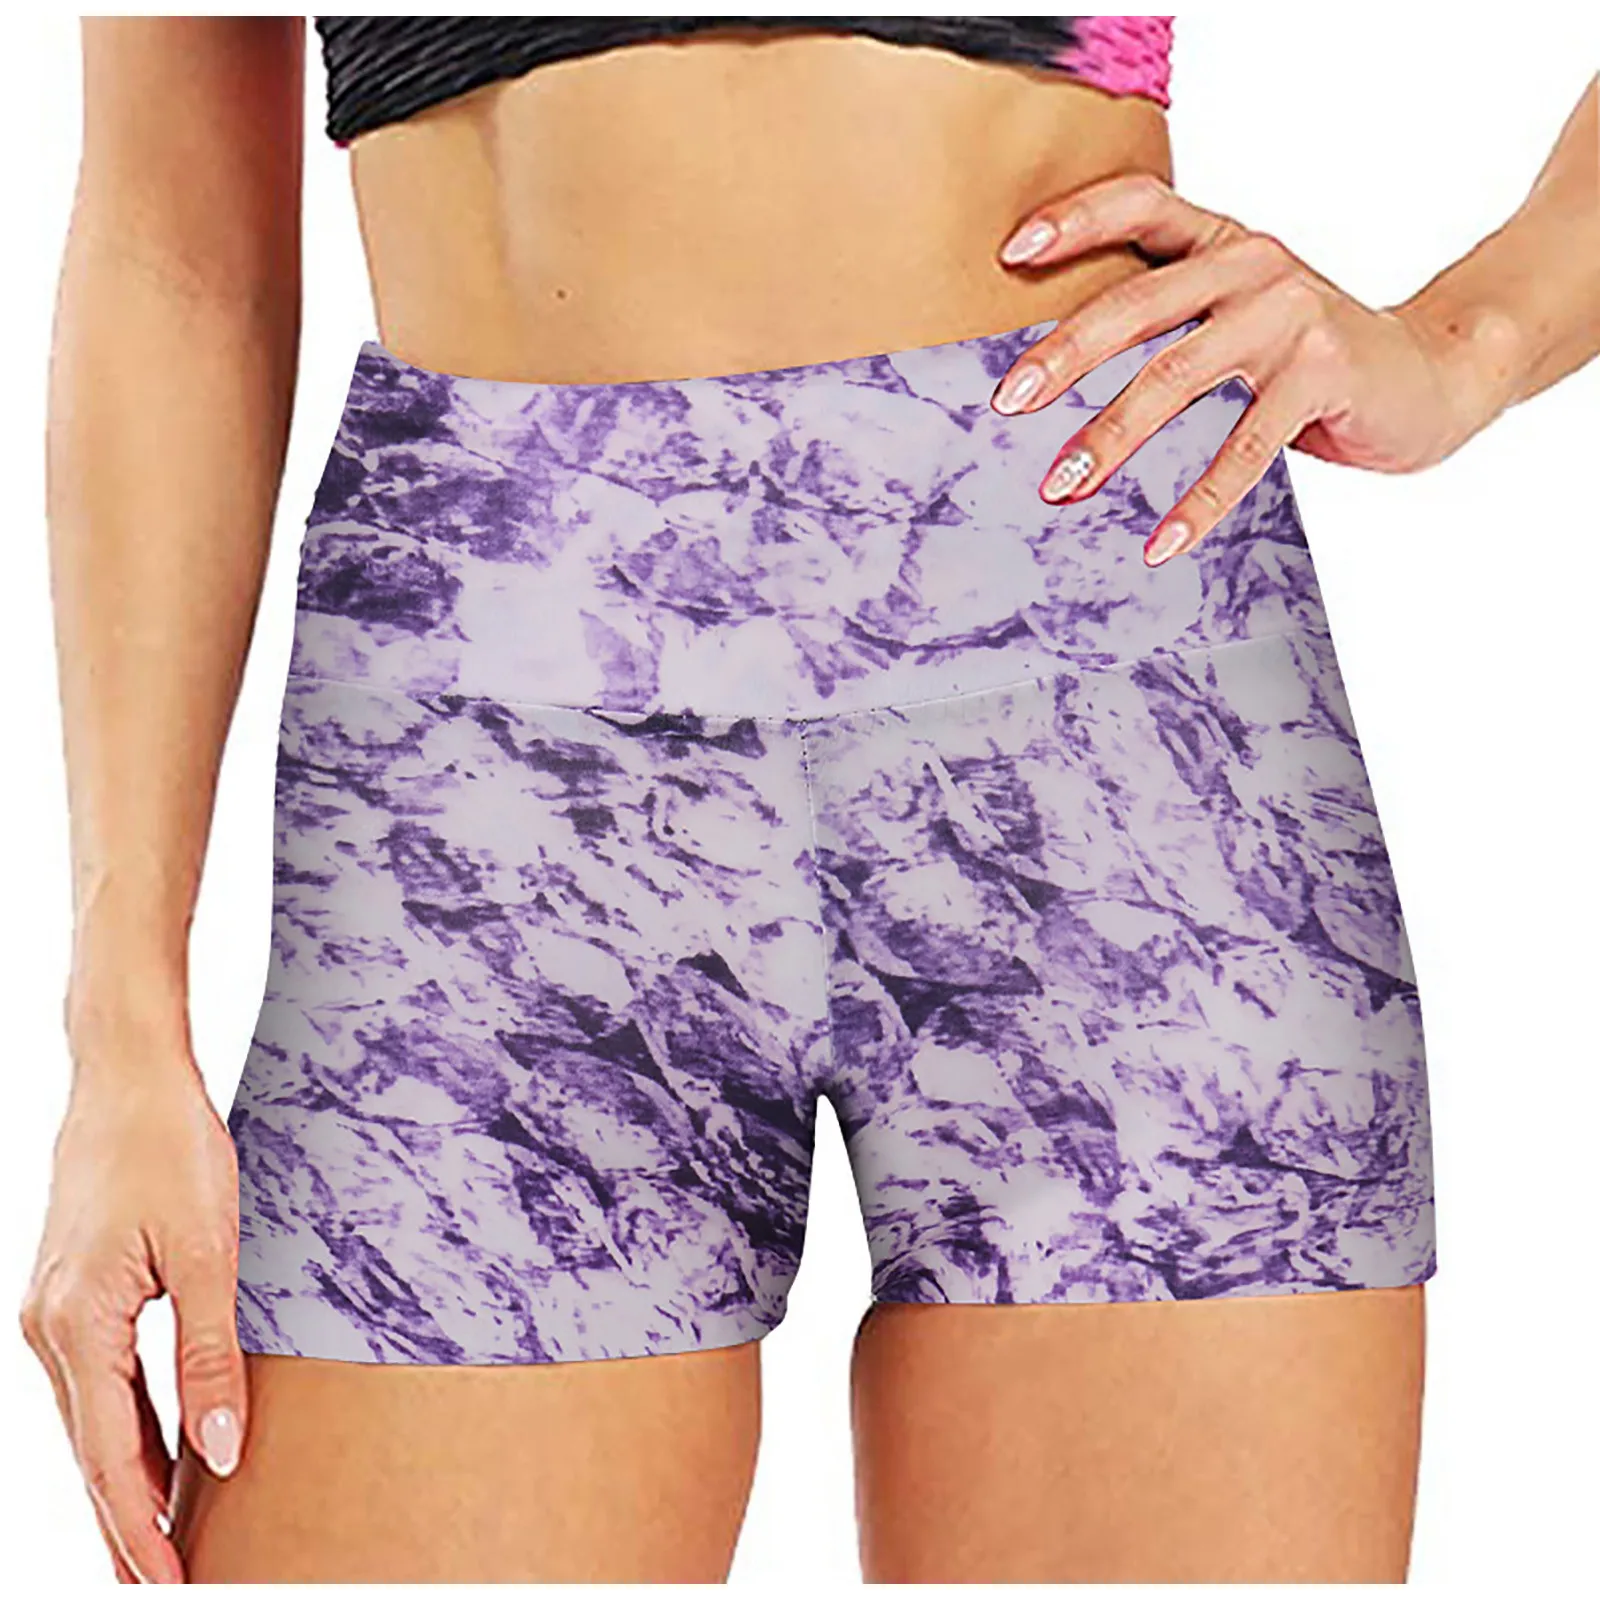 High-waisted Printed Leggings Seamless Sports Shorts Women Hip Lift Tights Pants Push Up Slim Elastic Jogging Trousers